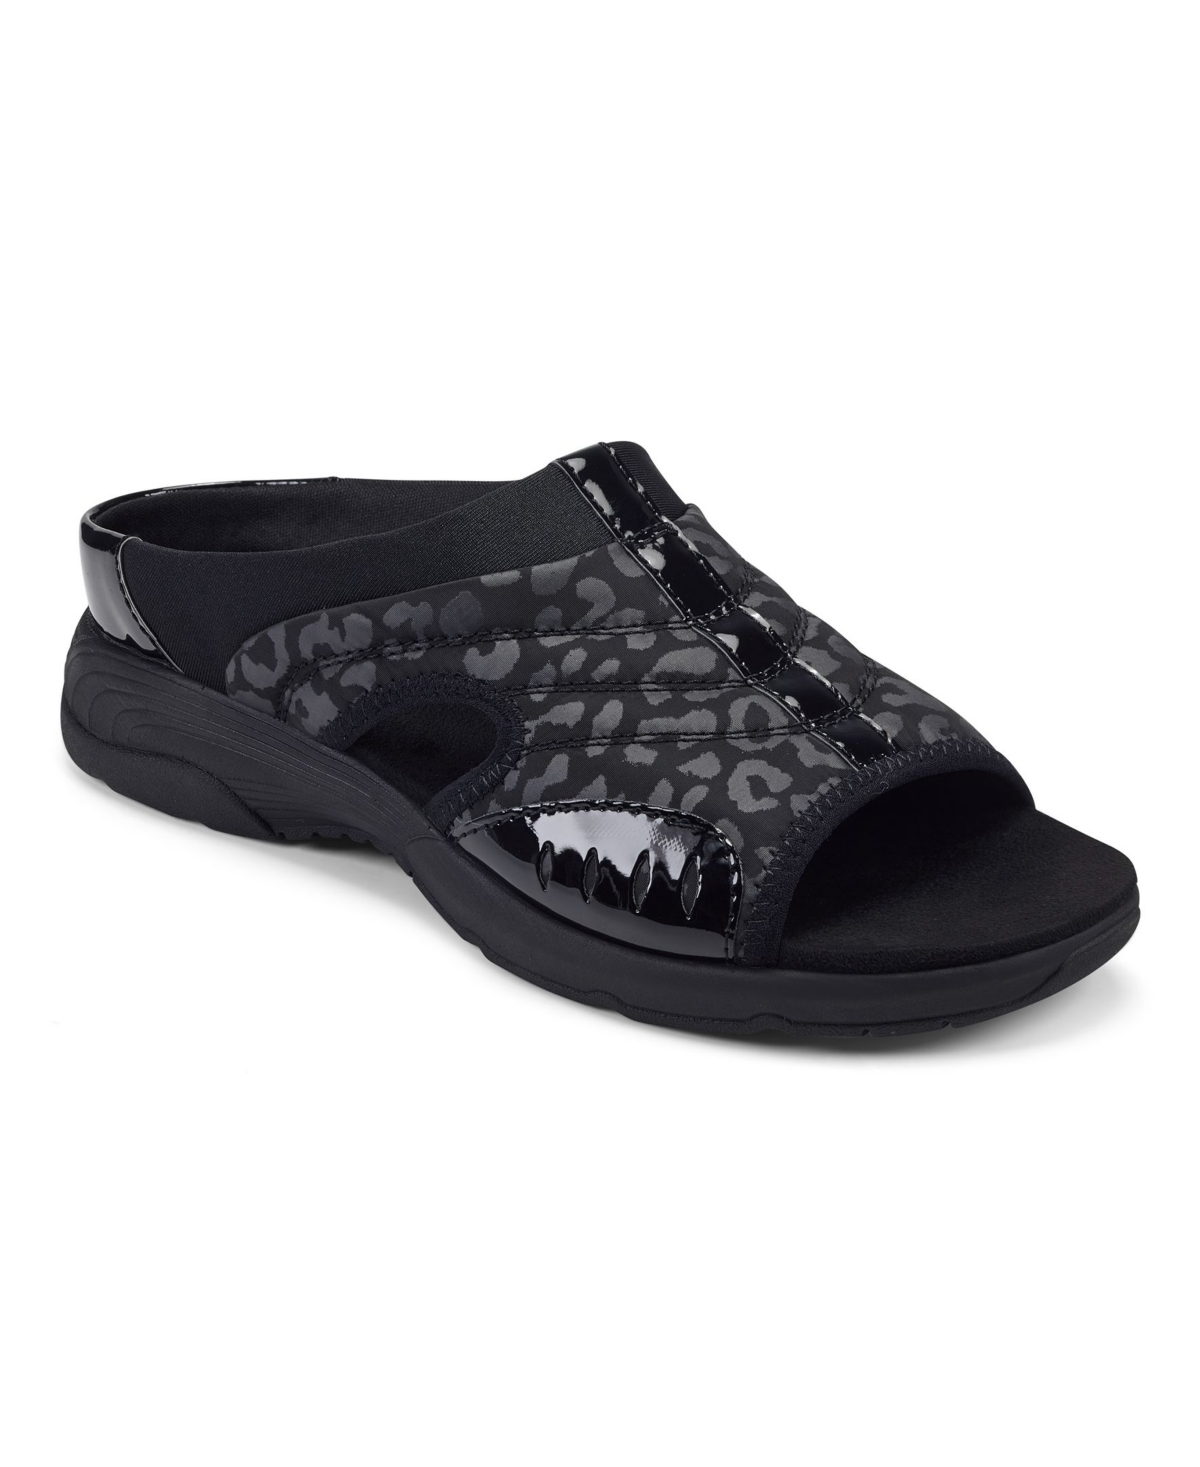 Women's Traciee Square Toe Casual Flat Sandals - Black Leopard Multi